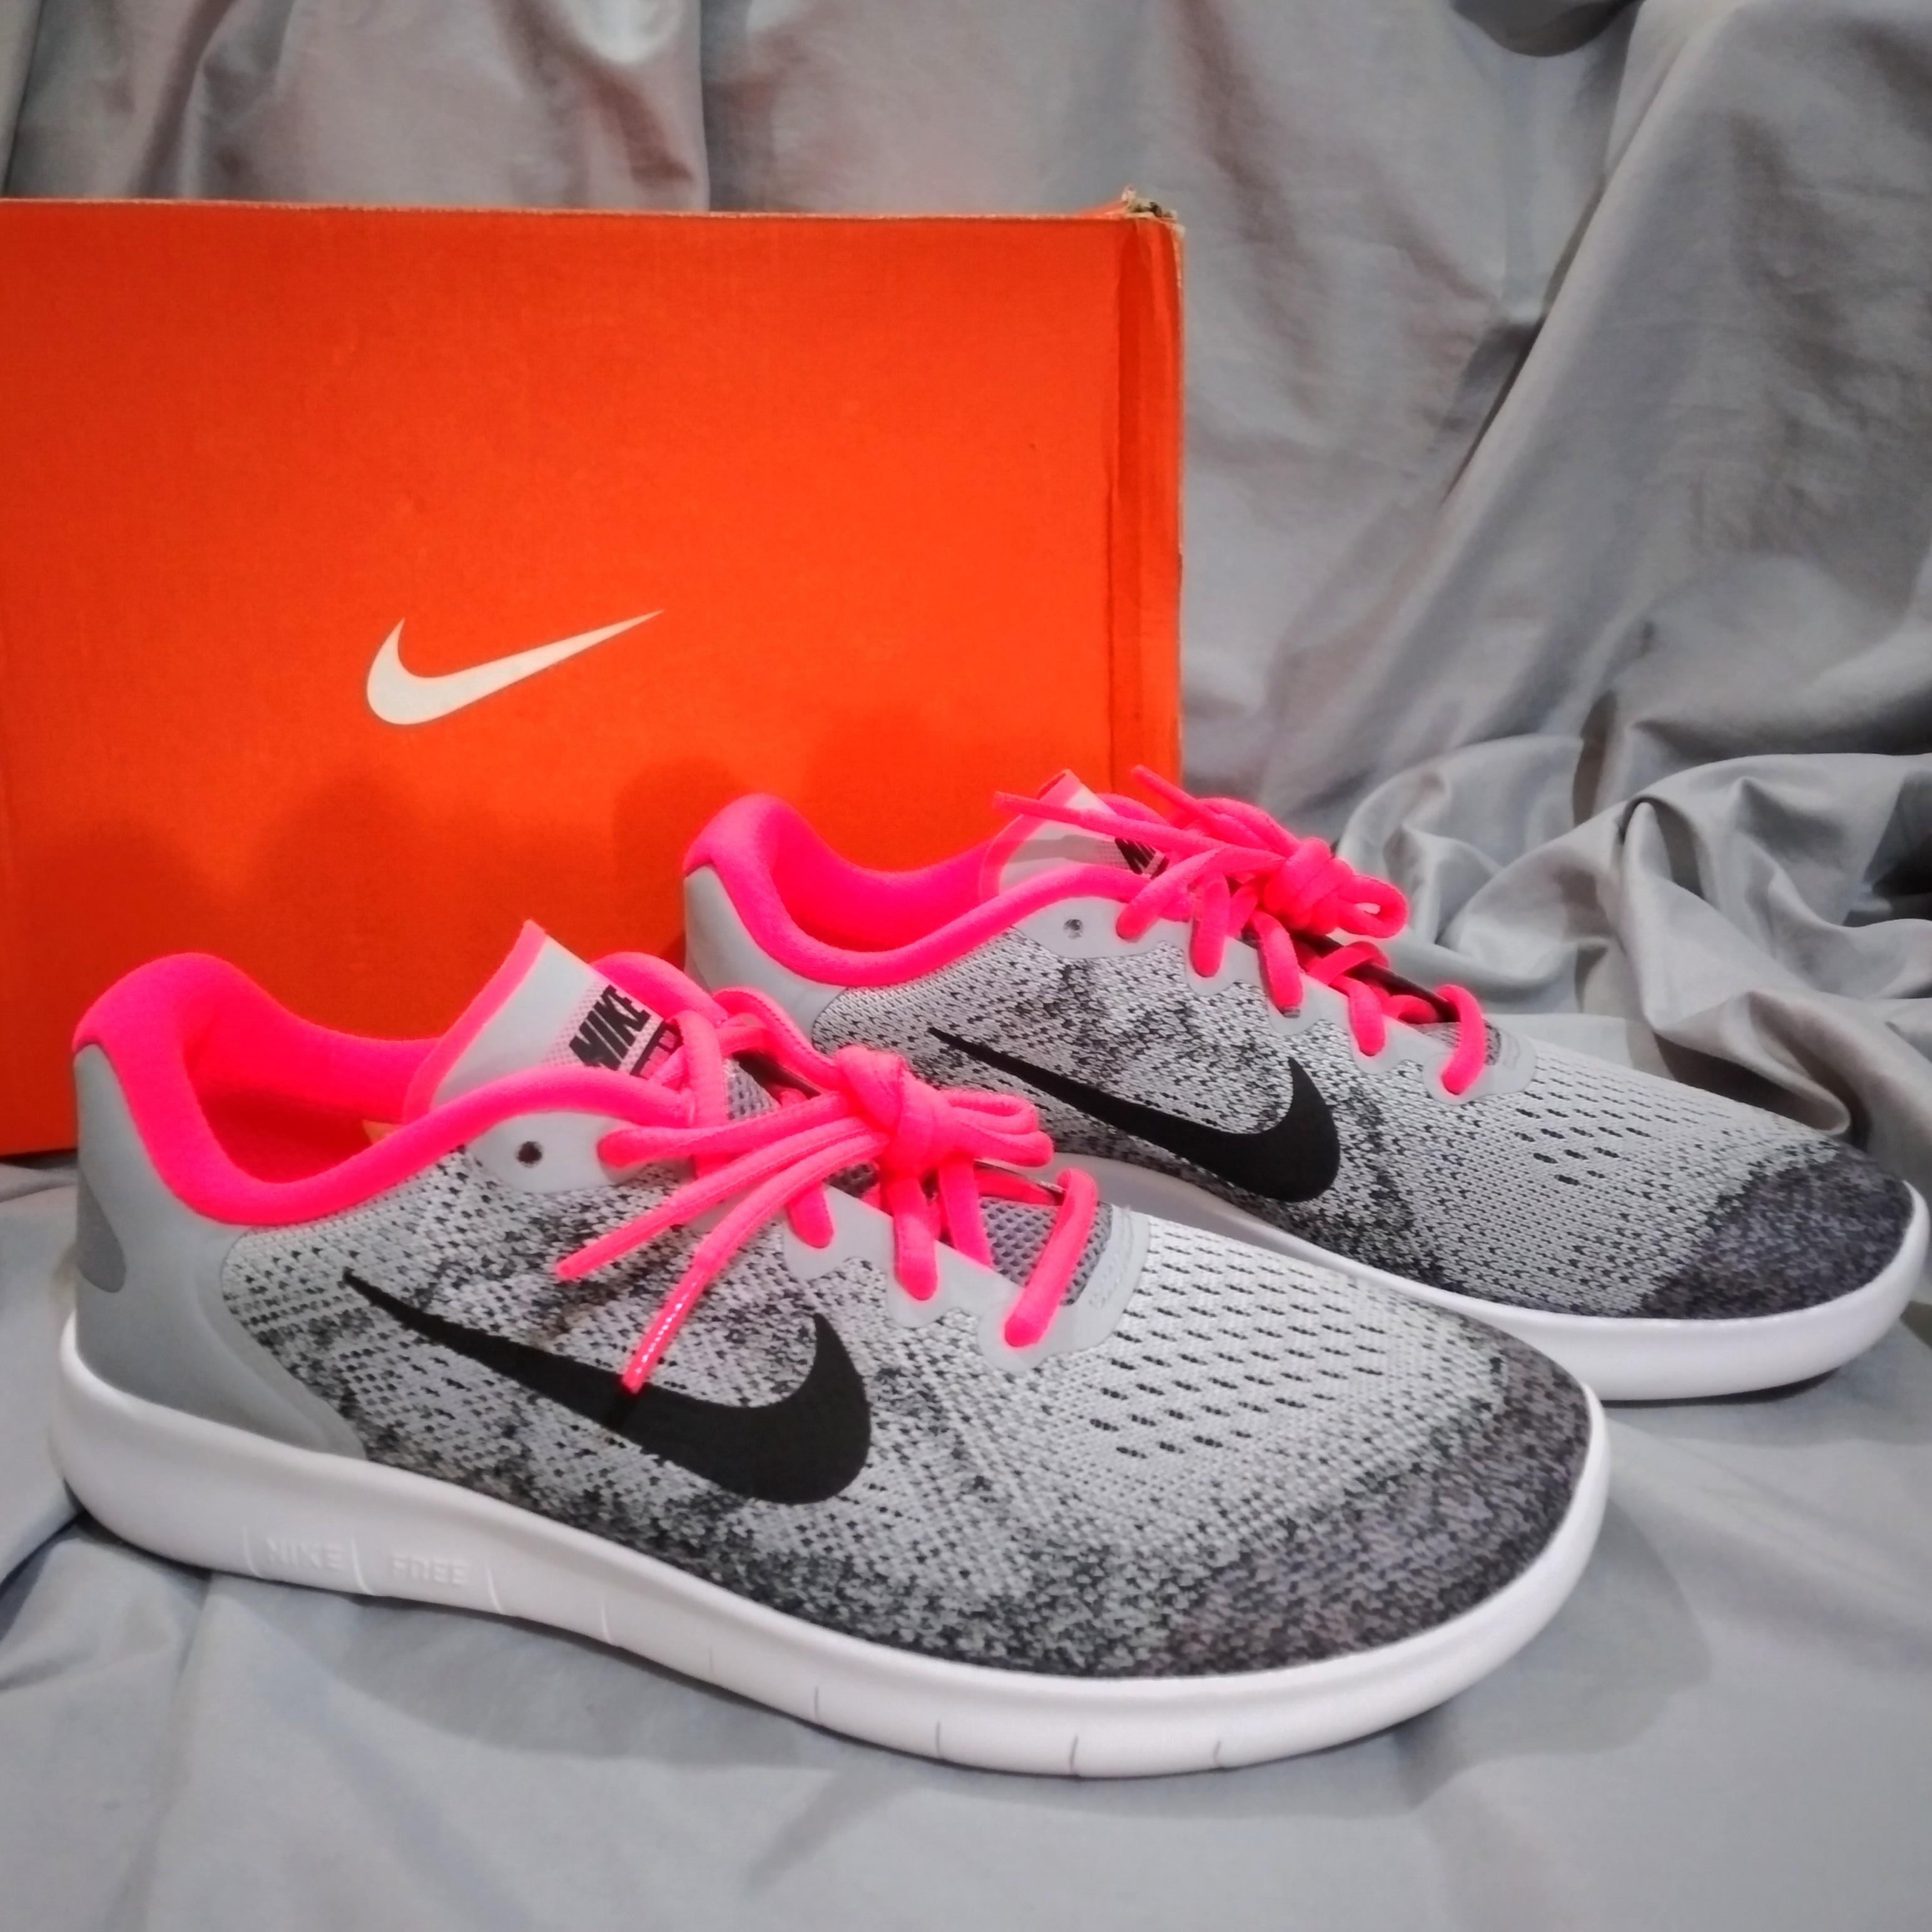 Nike Free Run Gray Neon Pink Running Shoes US 7, Women's Fashion ... خاتم رجالي ماركة